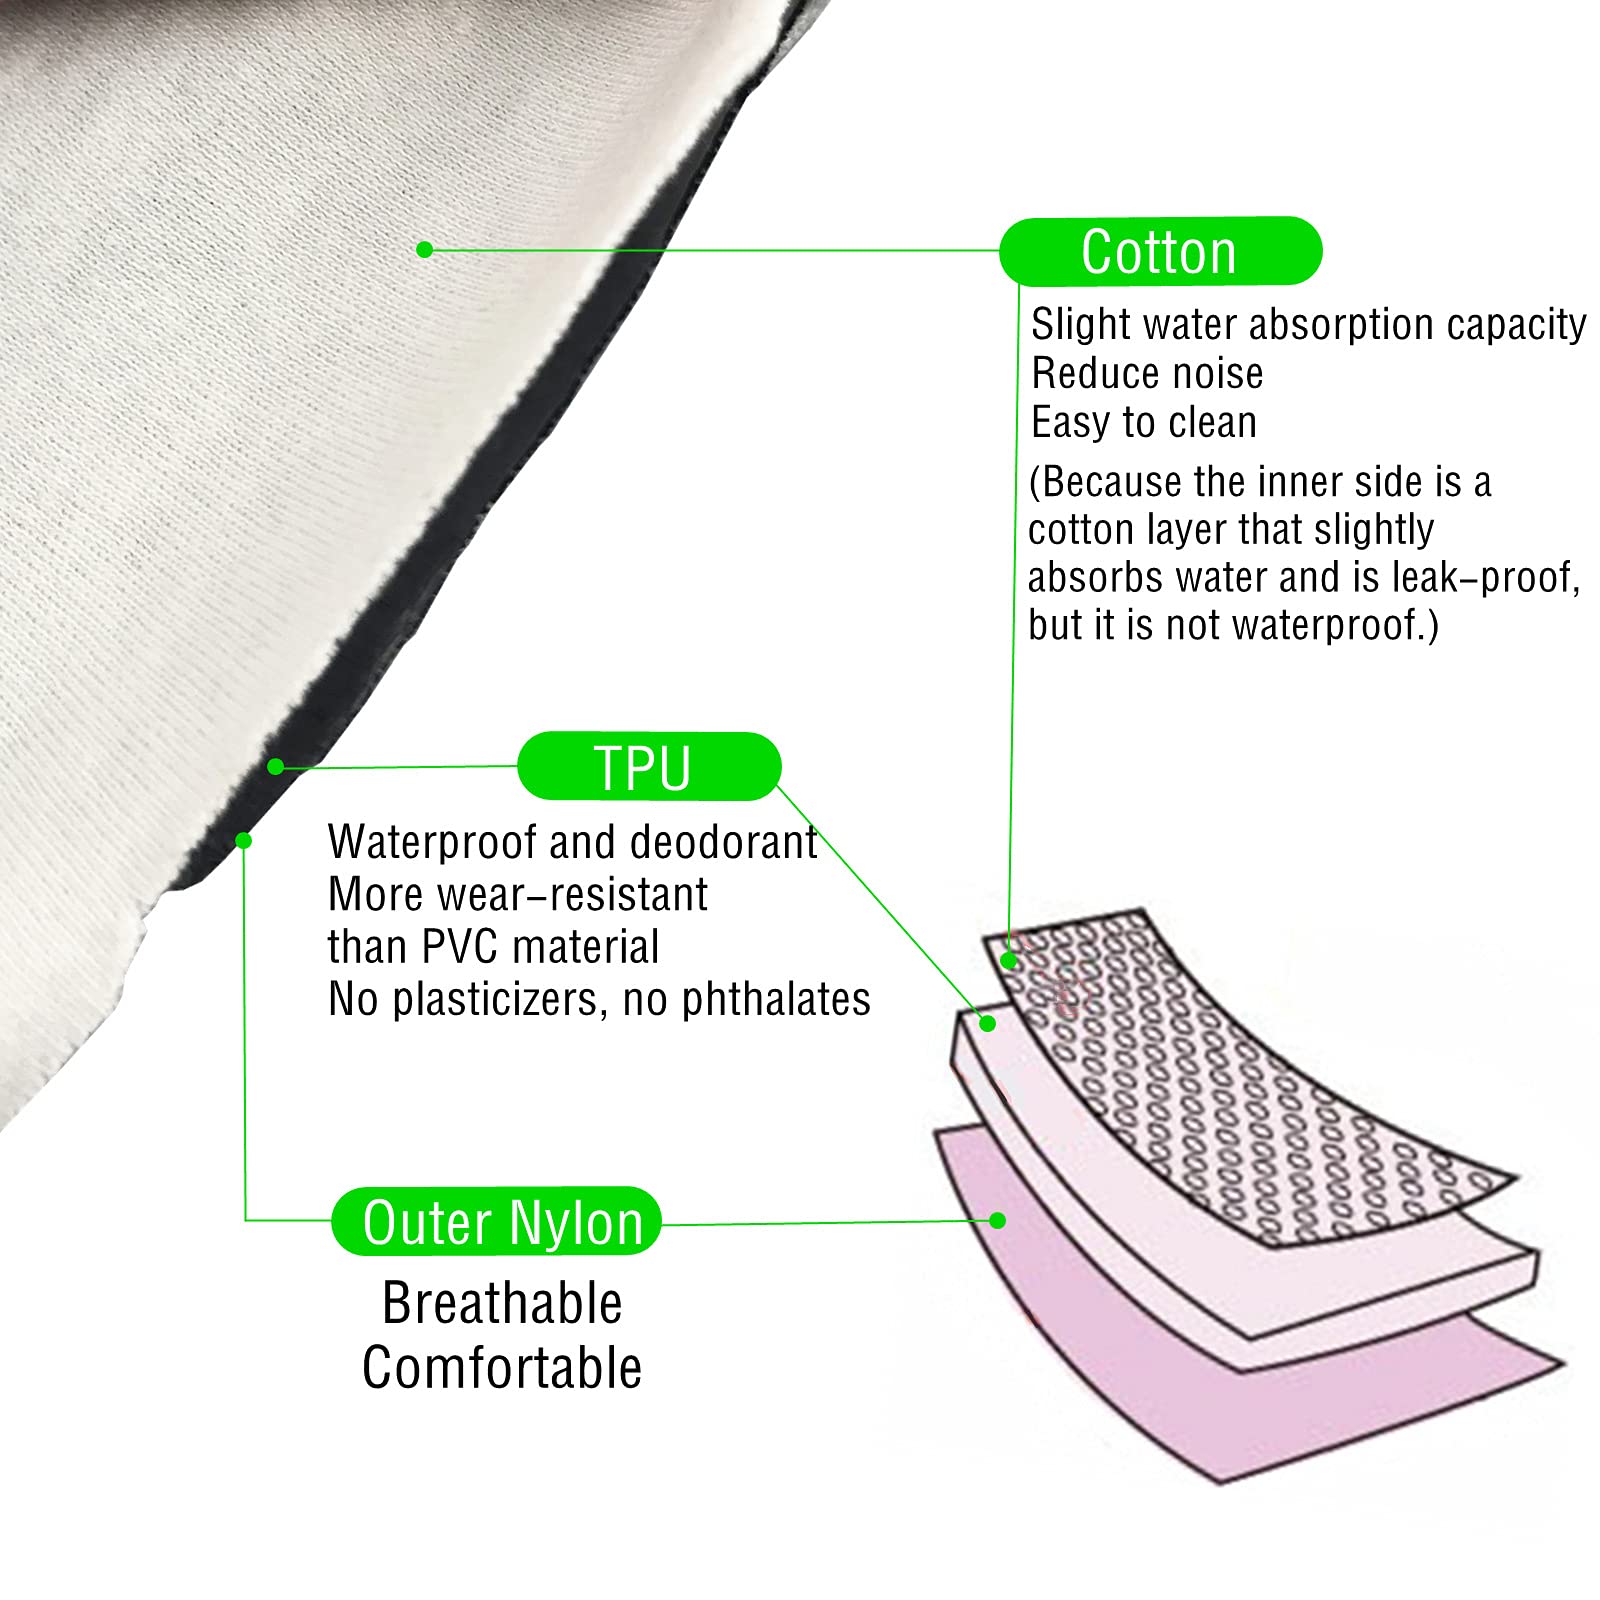 Adult Diaper Cover for Incontinence, Cloth Active Latex Leak Proof Pants, Noiseless Reusable Washable Pull Up Plastic Pants (Black, L)